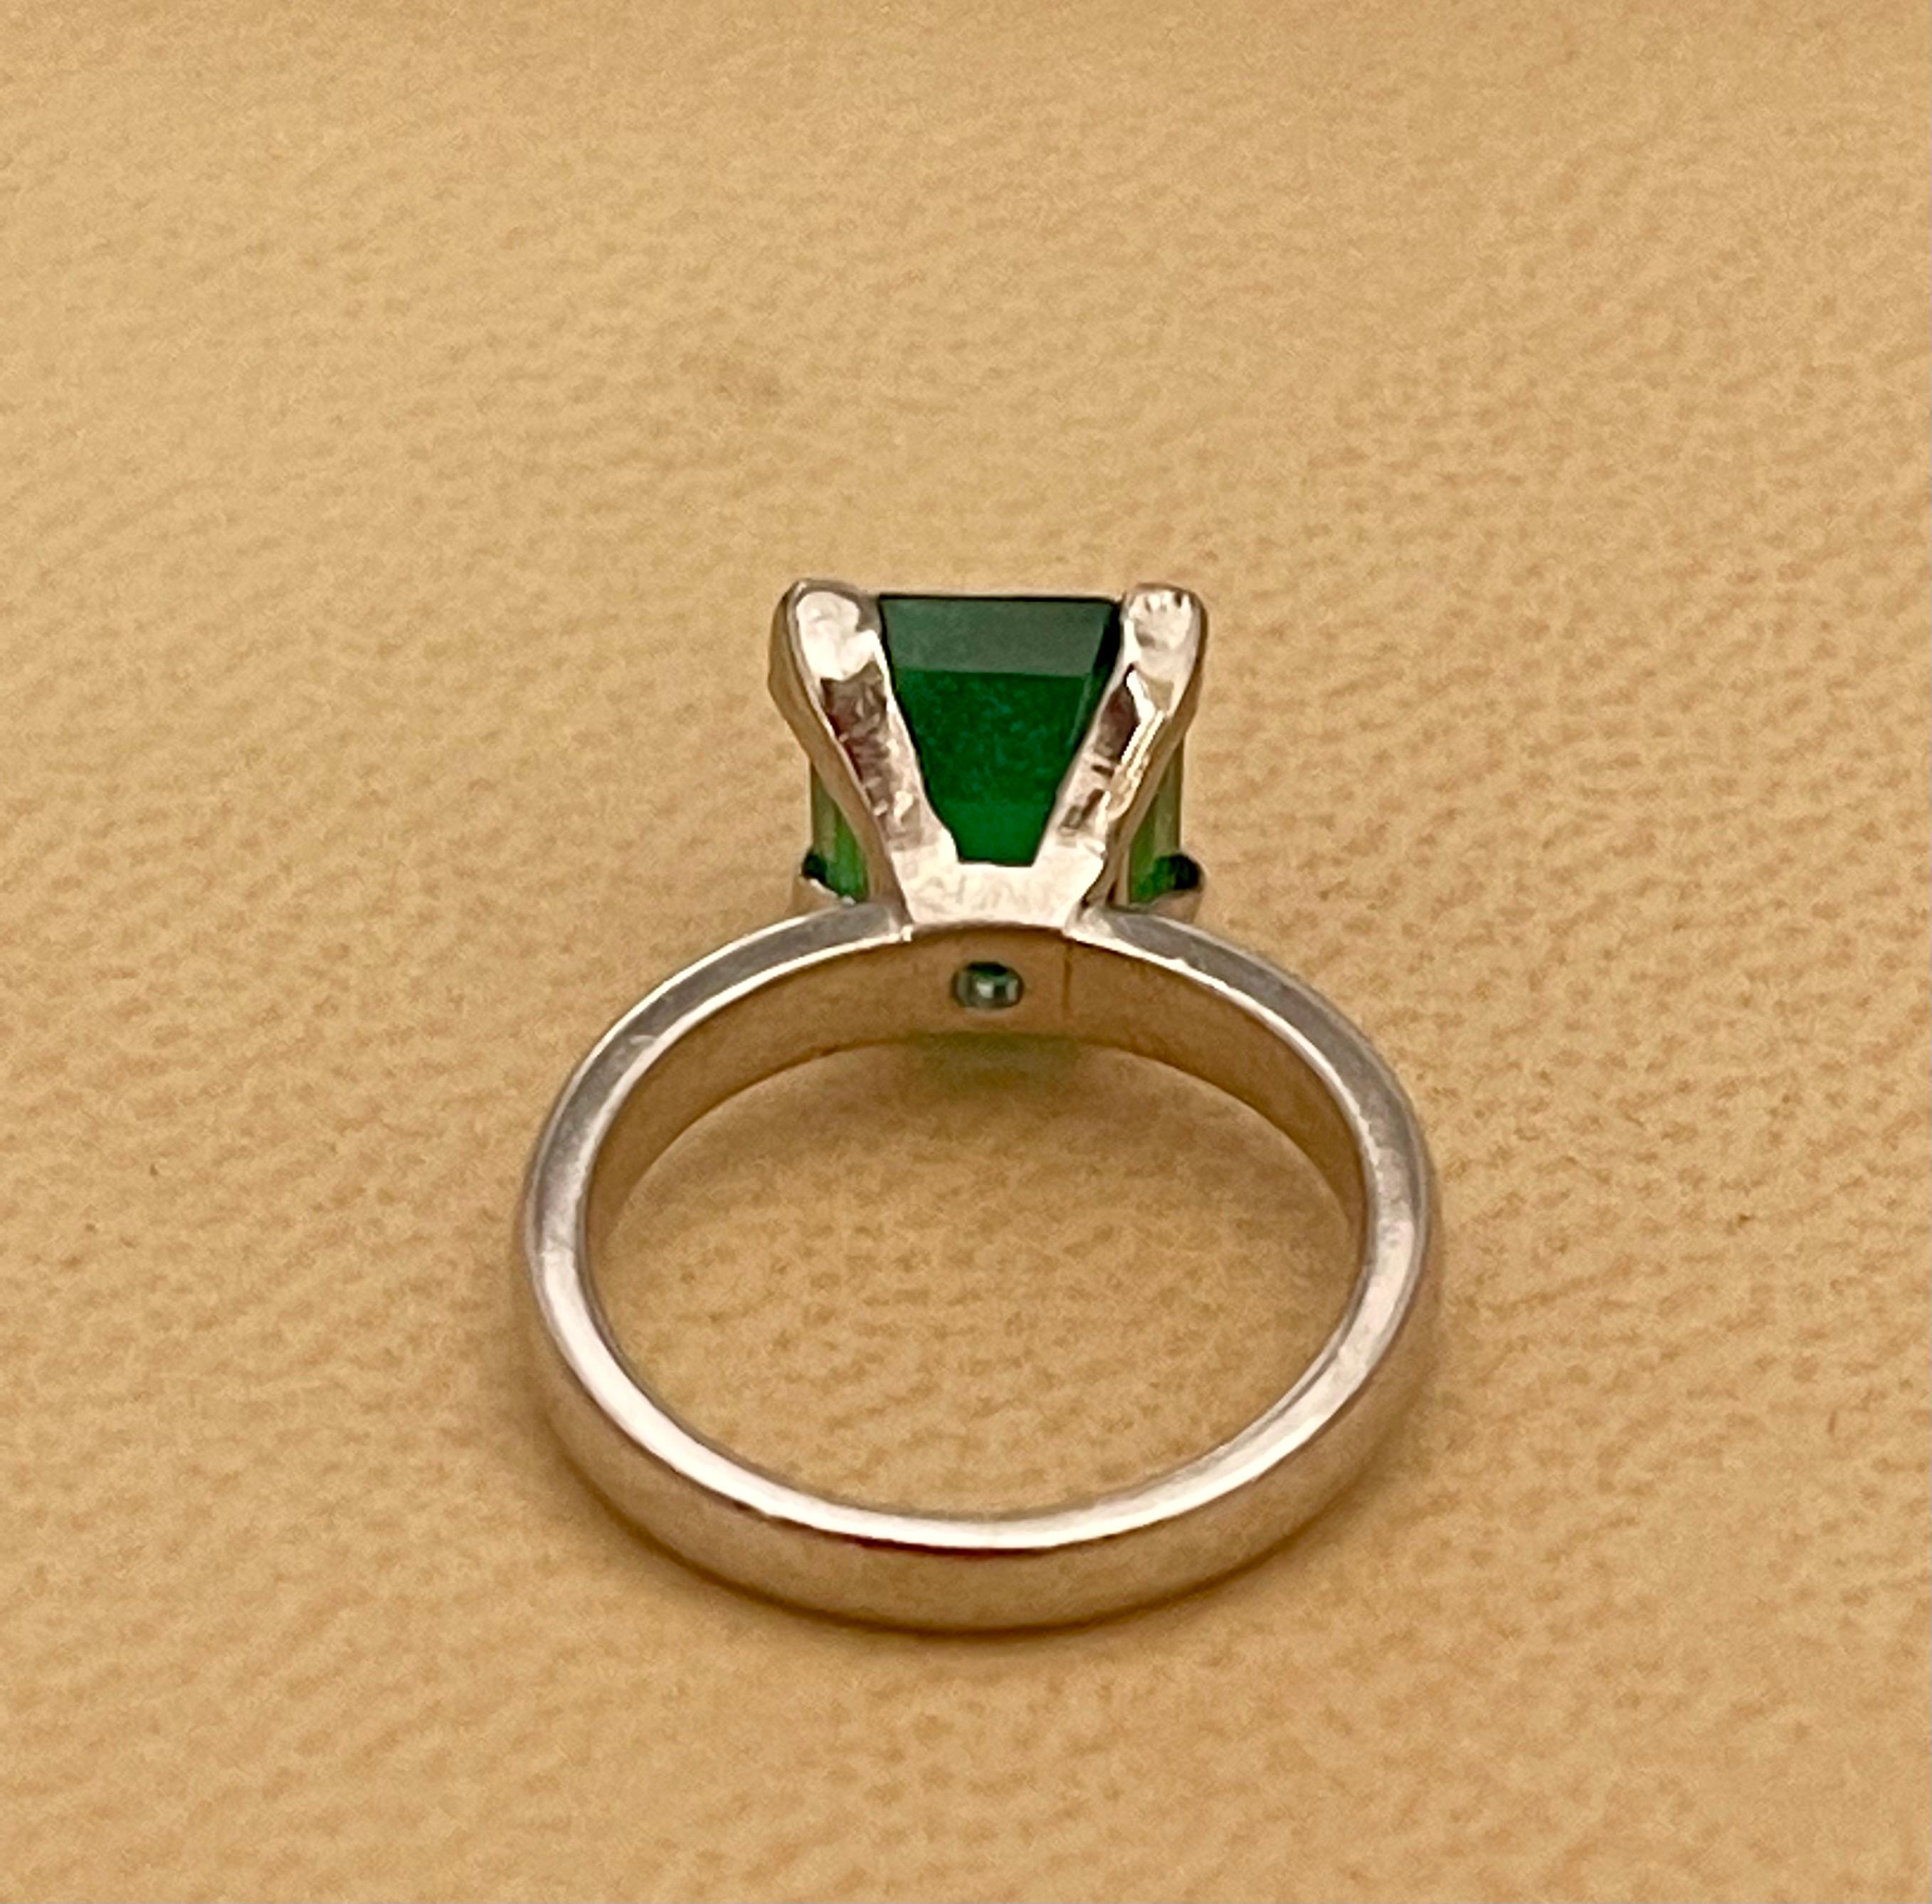 3 Carat Natural Emerald Cut Emerald Ring in Platinum 4